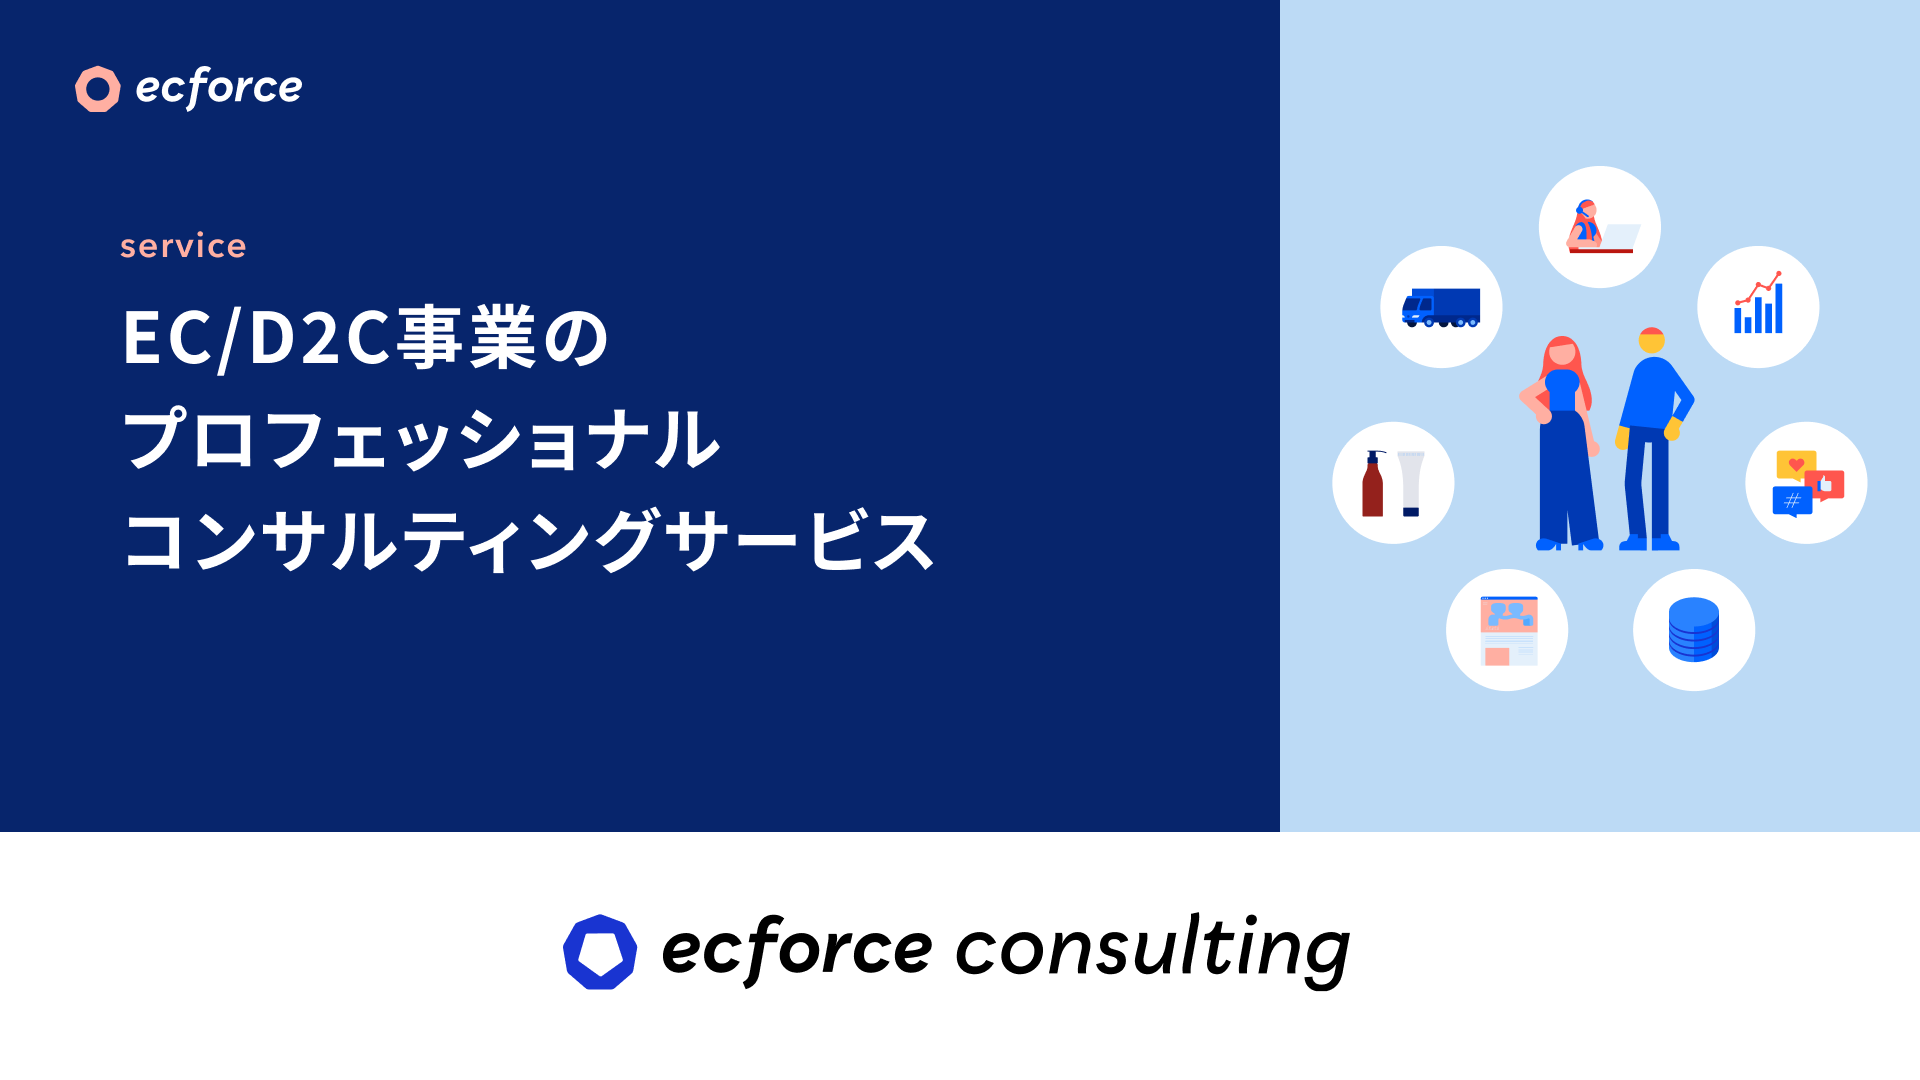 ECコンサルティングサービス『ecforce consulting』サービス資料